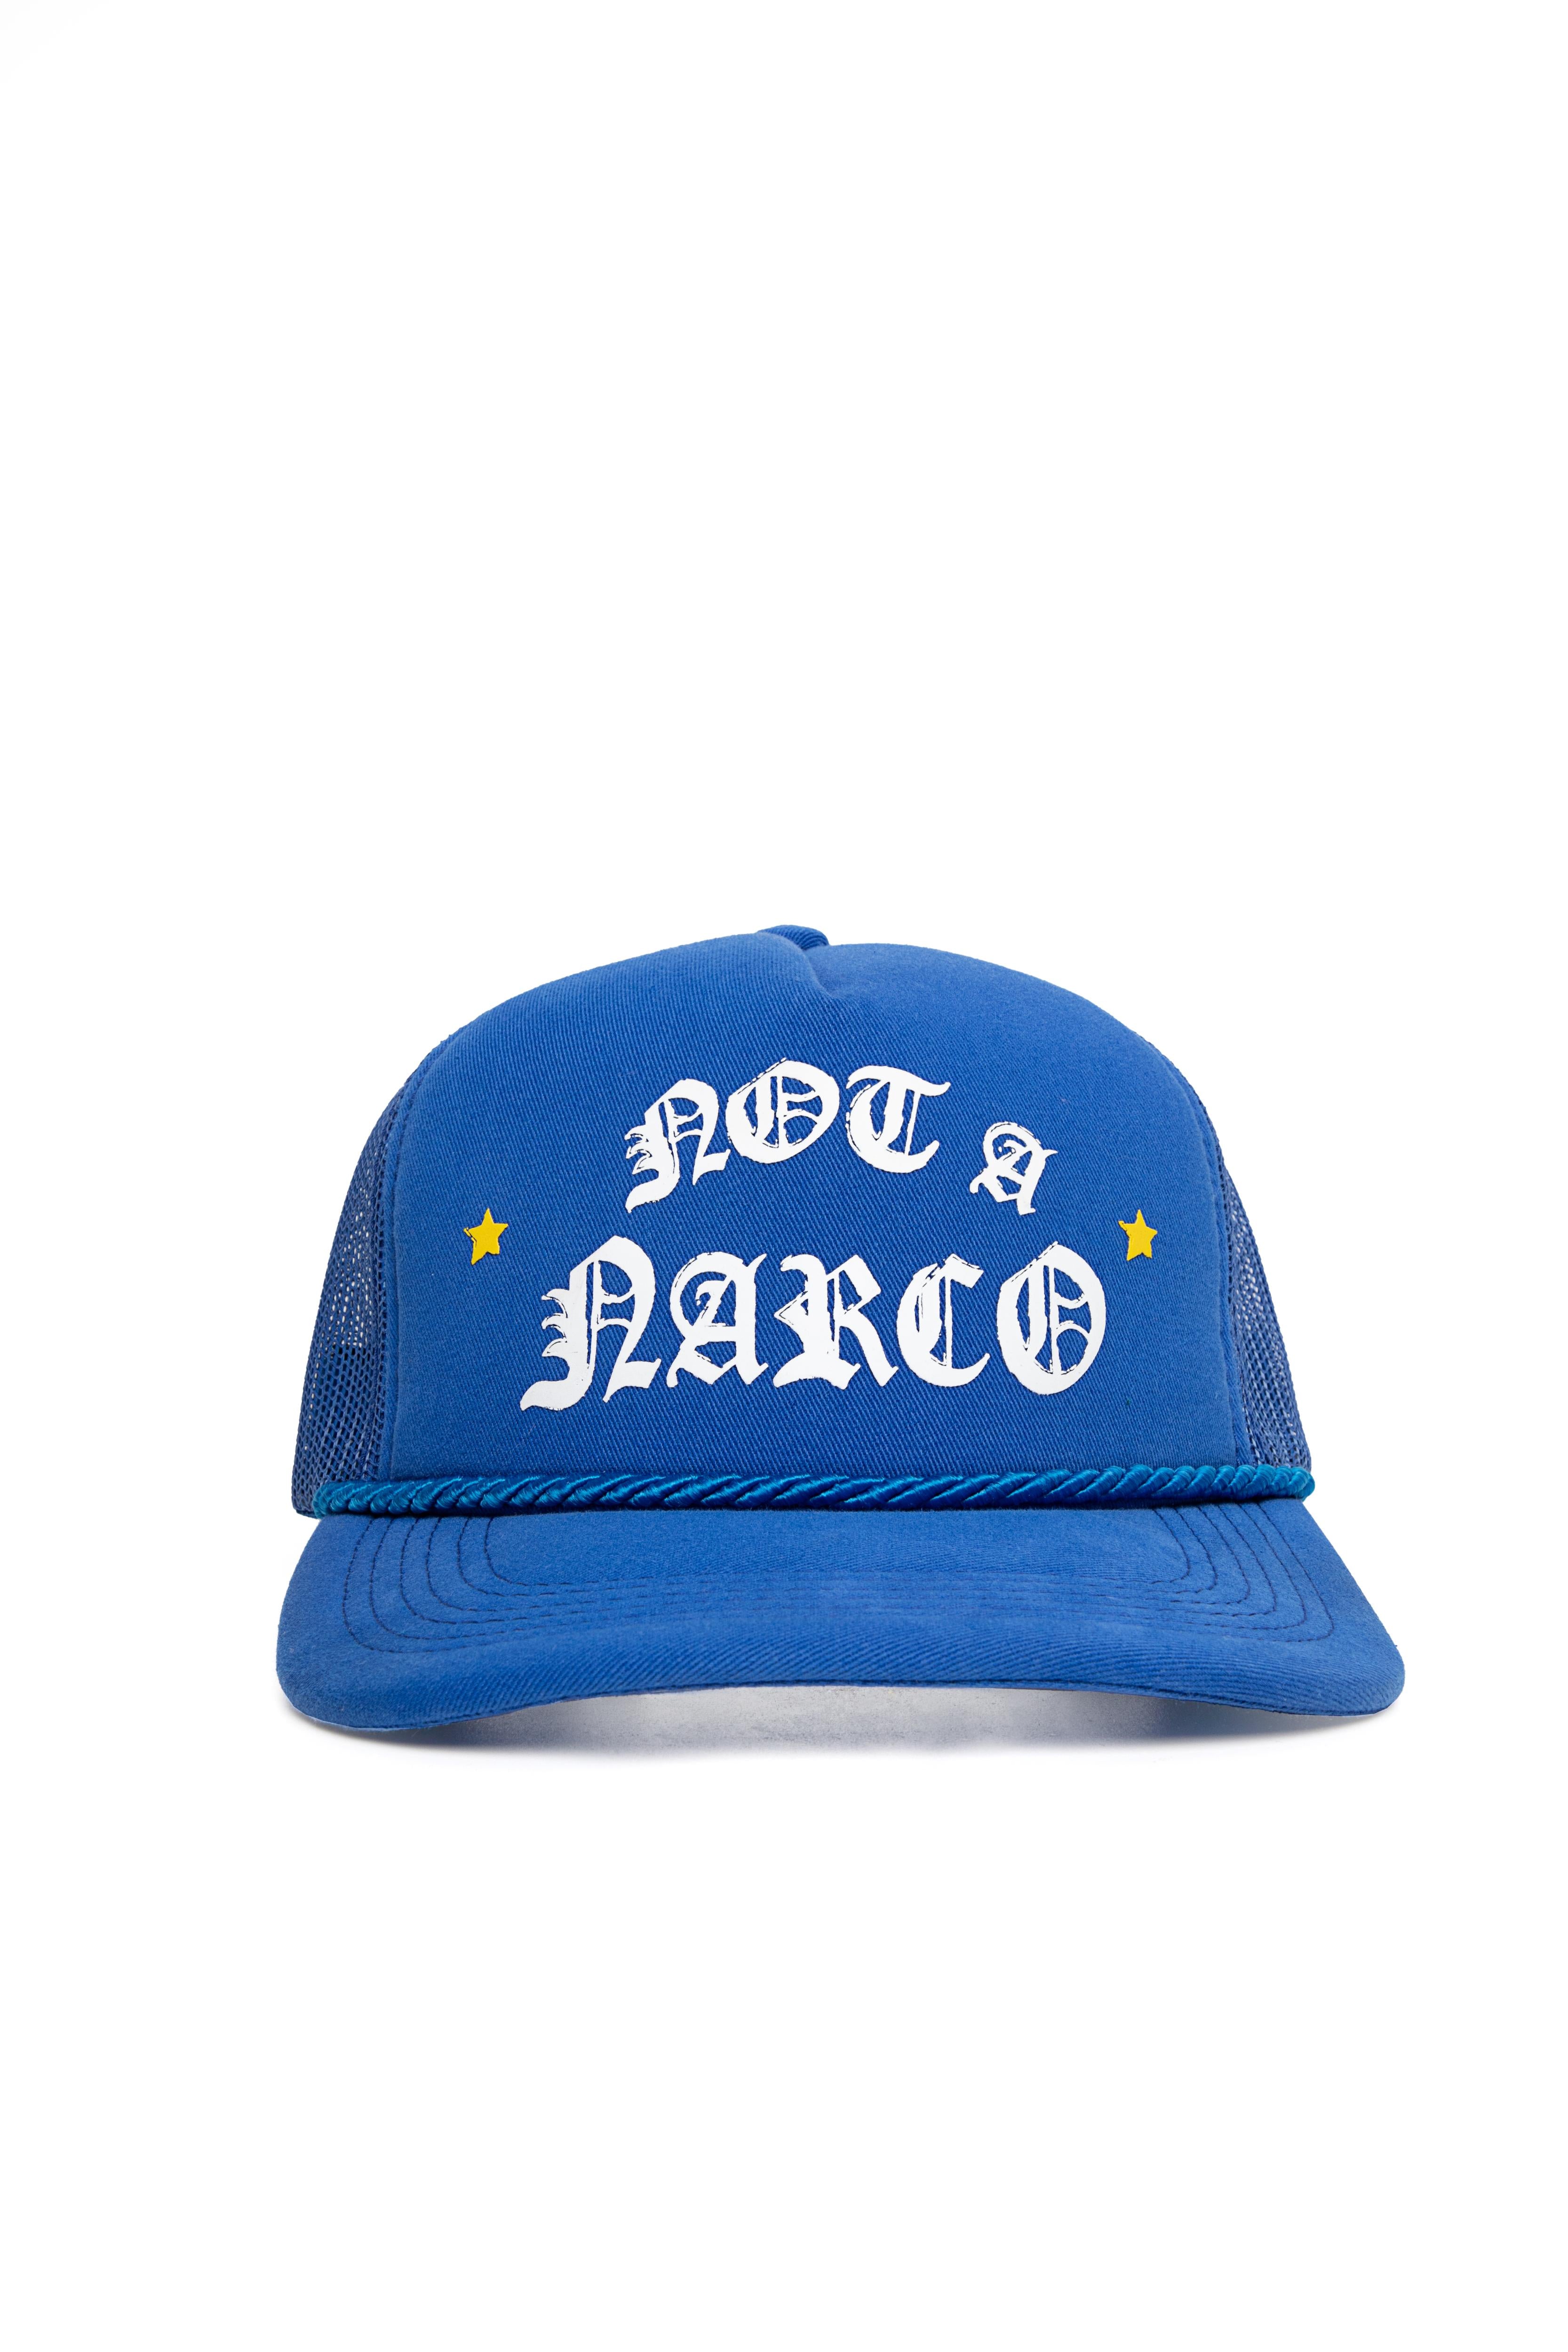 NOT A NARCO™ SOUVENIR BLUE/YELLOW CAP